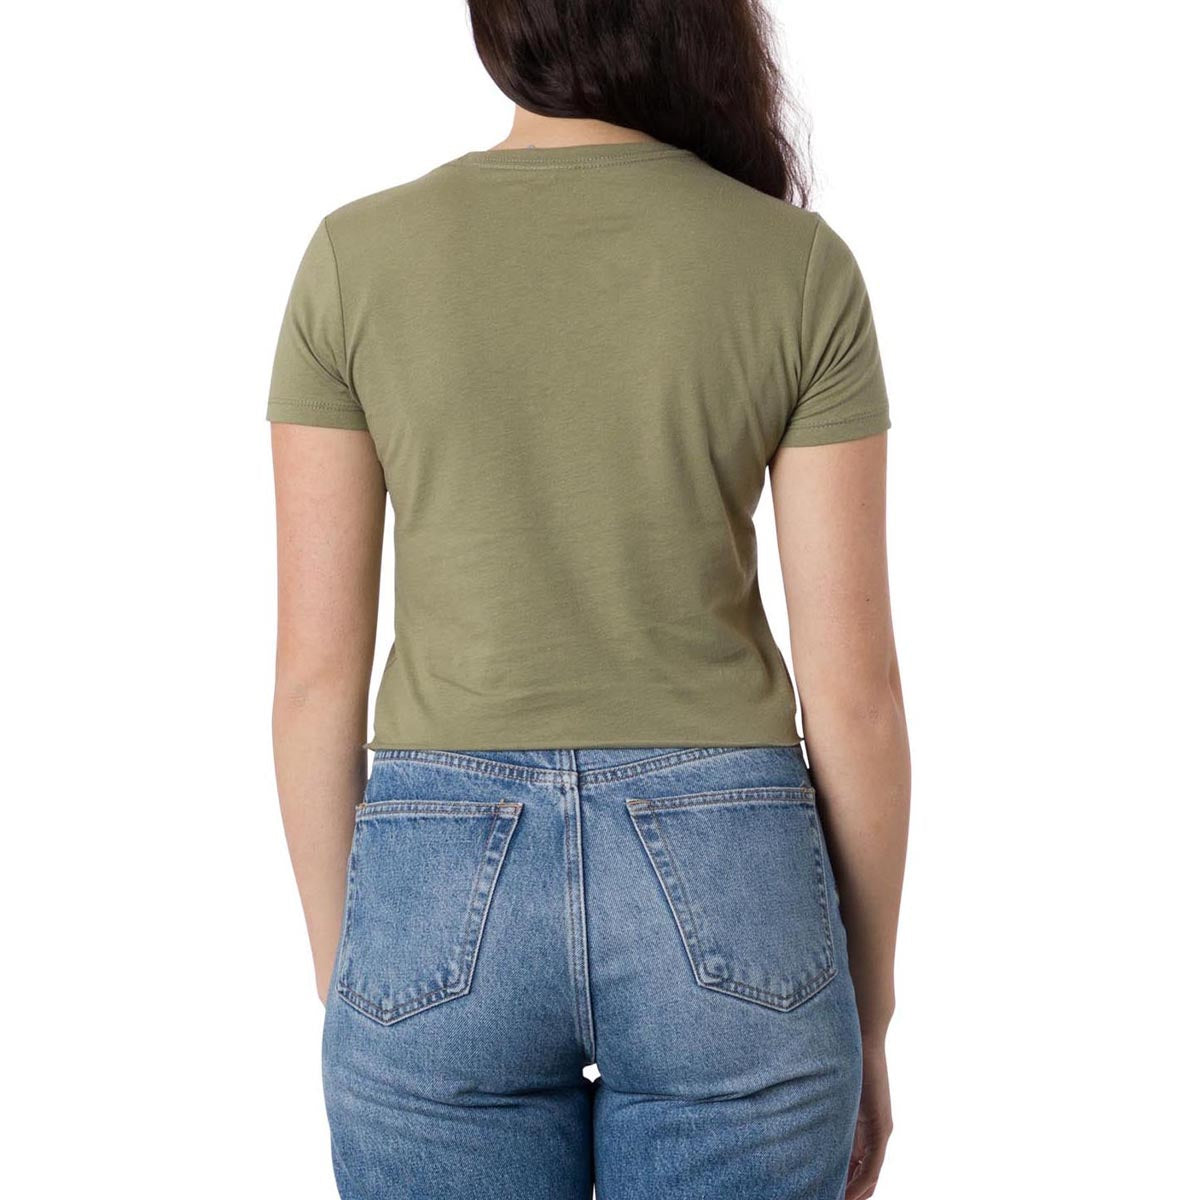 Santa Cruz Womens Desert Strip Crop Fitted T-Shirt - Light Olive image 2